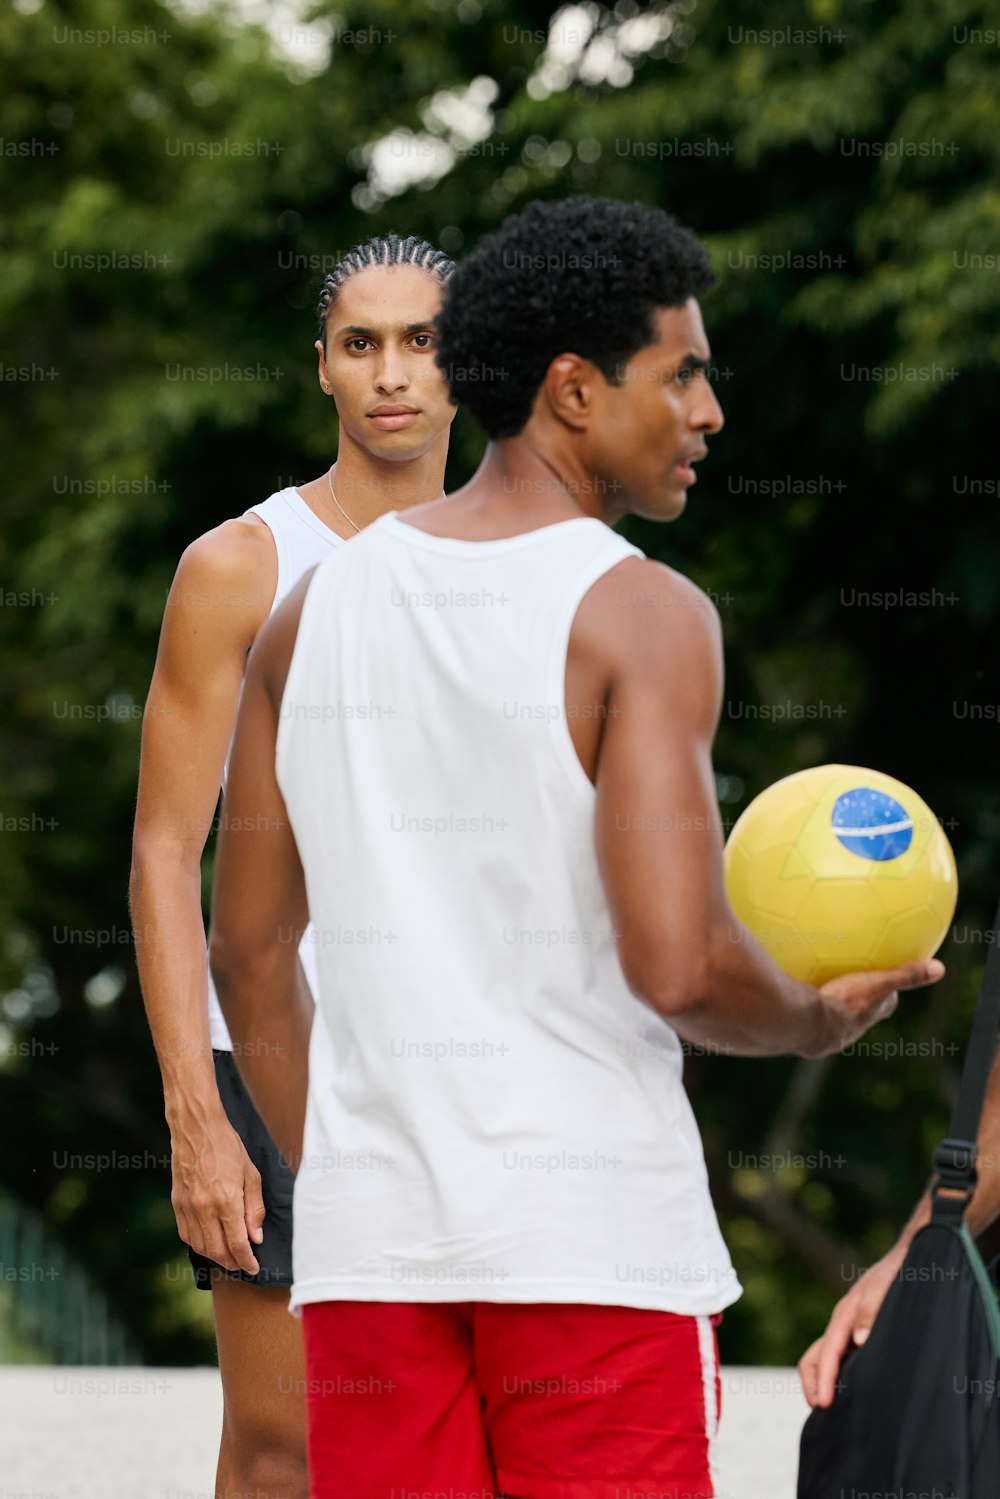 un uomo che tiene un frisbee giallo accanto a un altro uomo